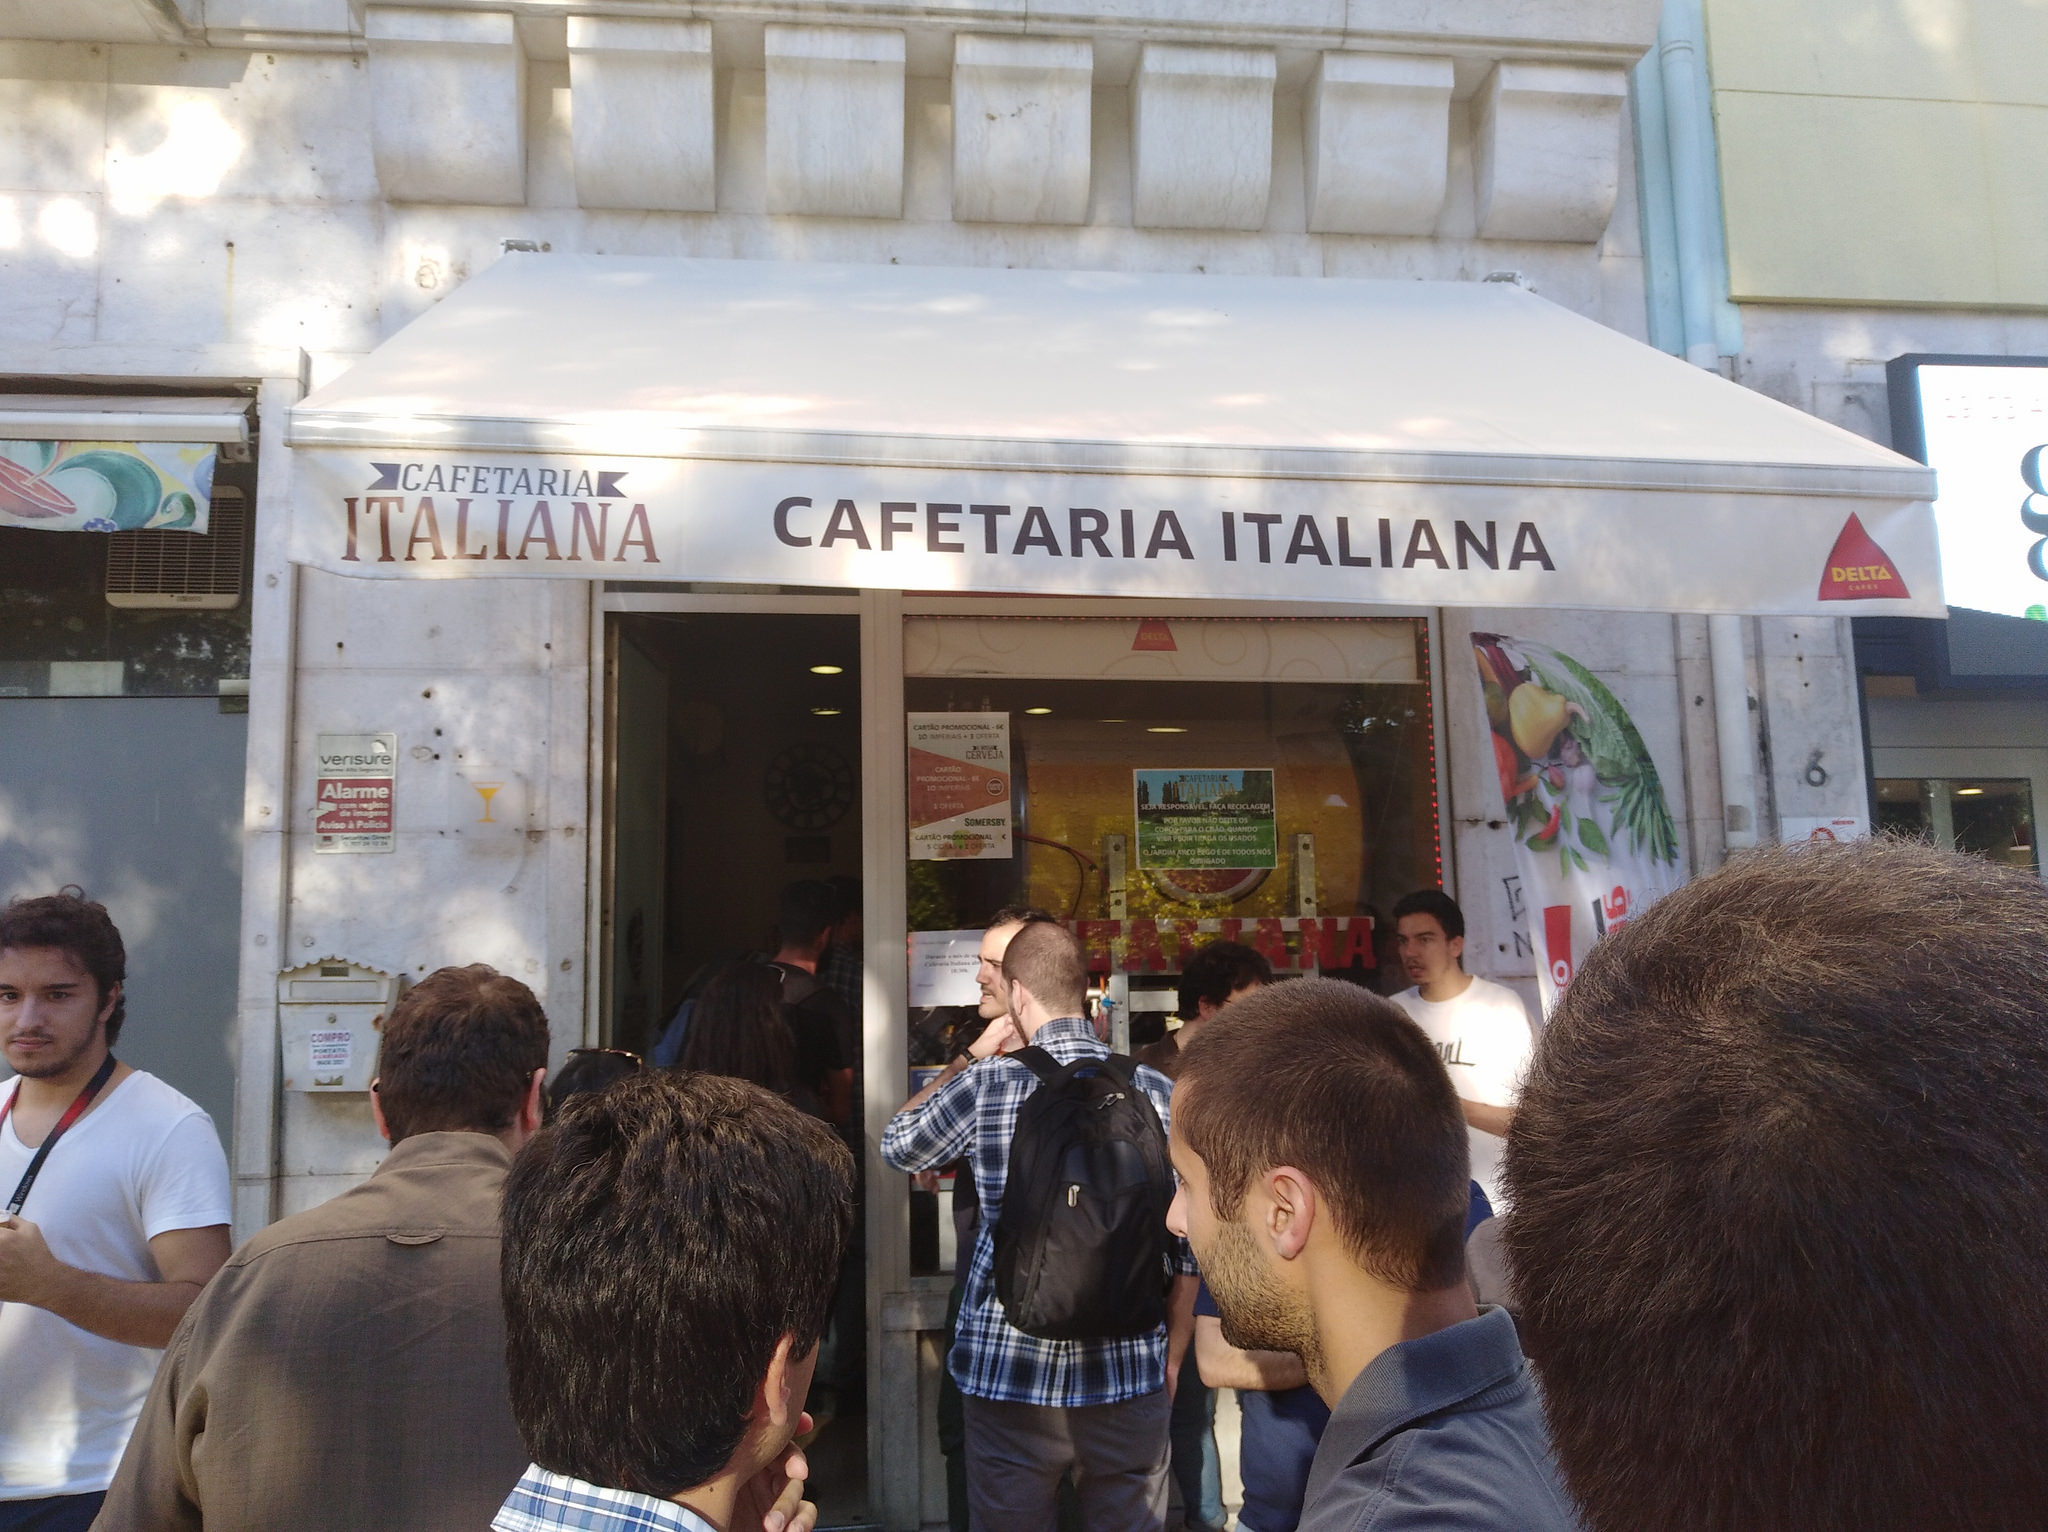 Cafetaria Italia, Arco dos Ciegos